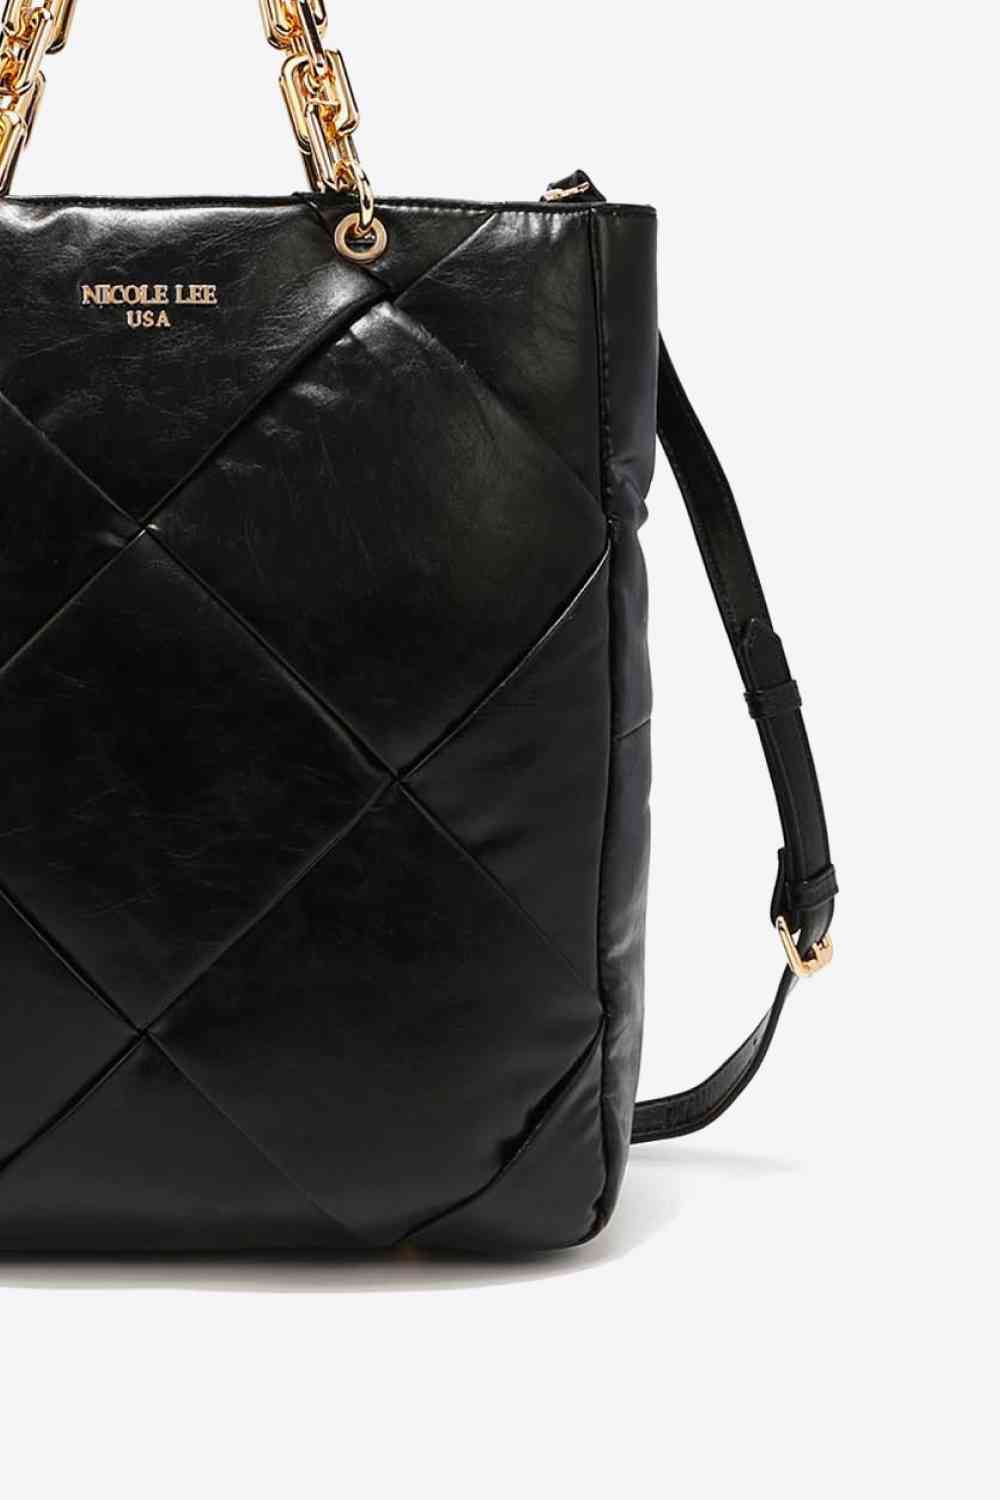 Nicole Lee USA Mesmerize Handbag No 22